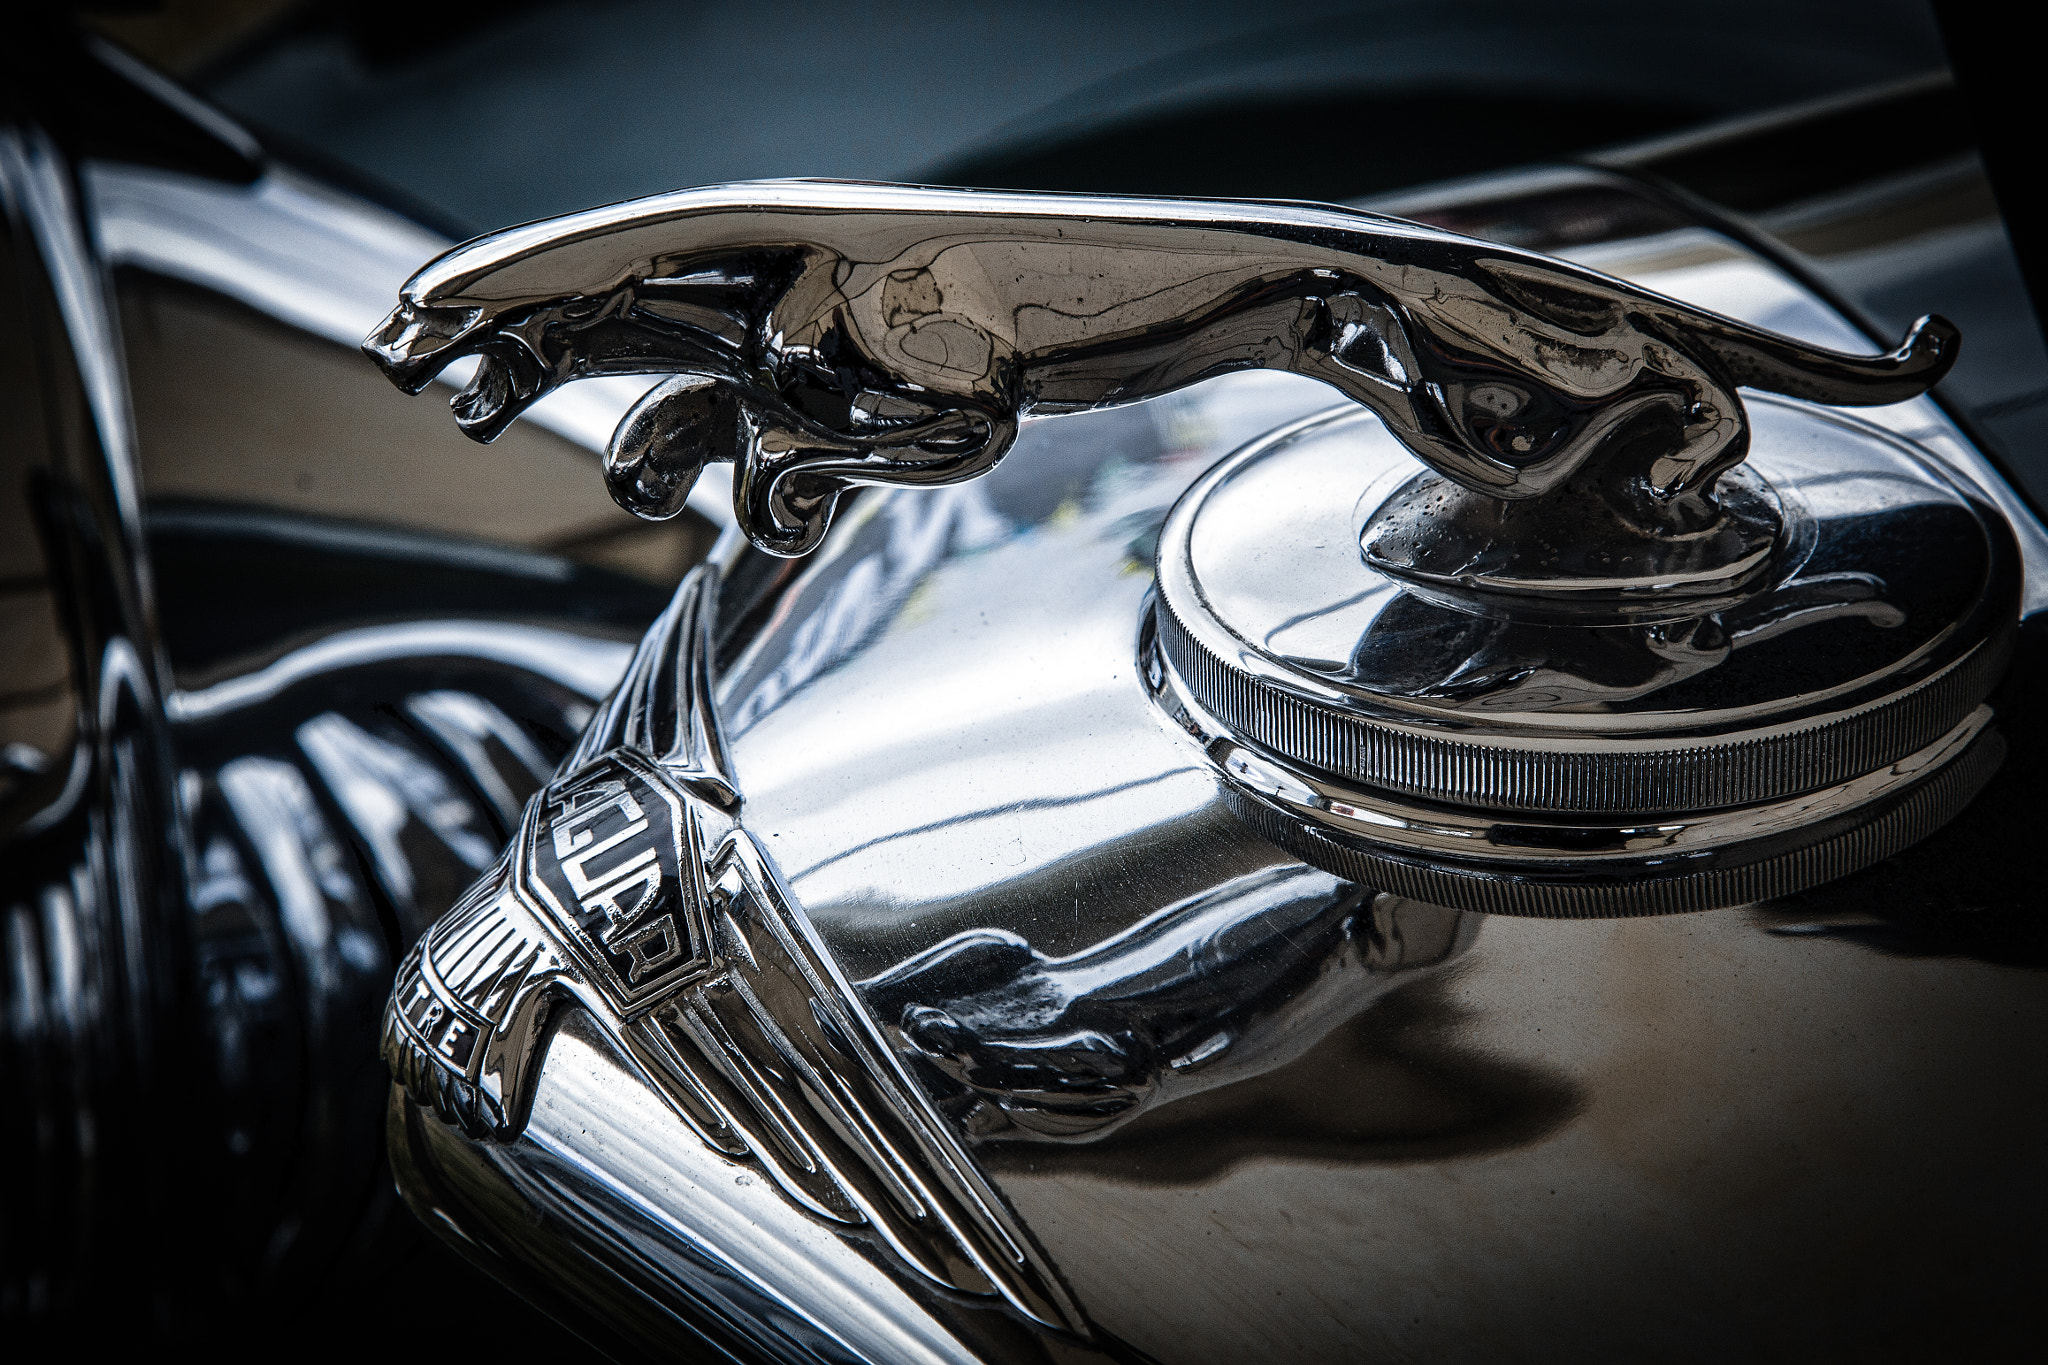 Close-up of an old Jaguar automobile emblem